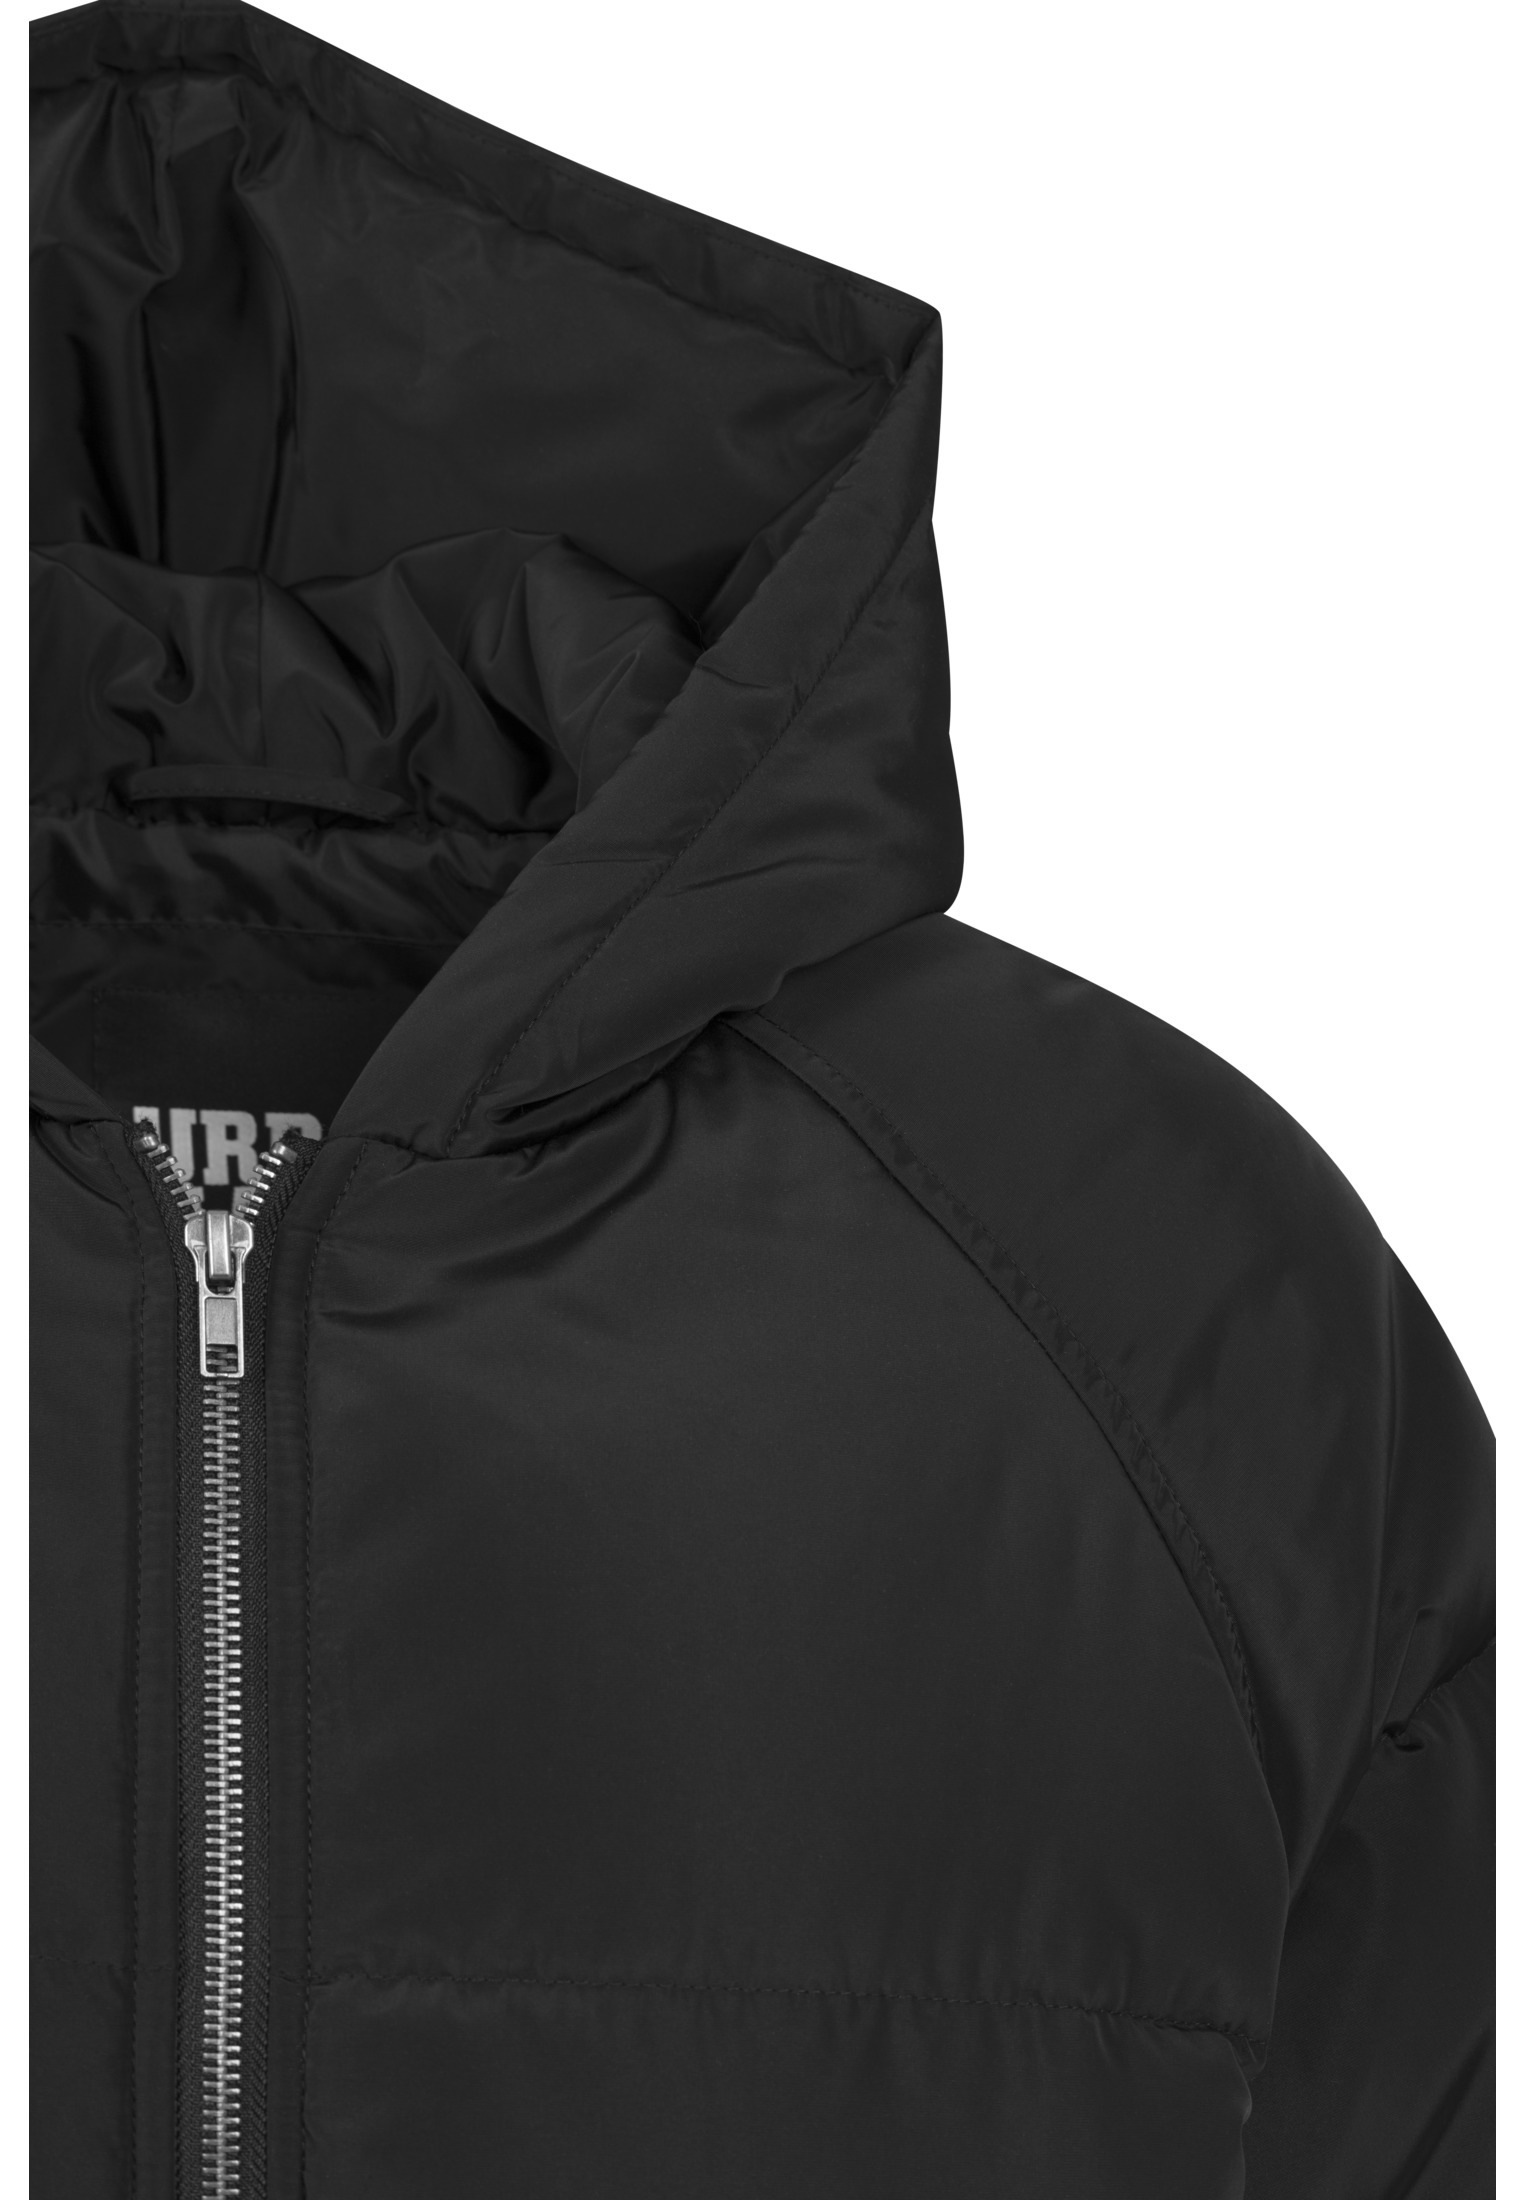 URBAN CLASSICS Outdoorjacke »Damen Ladies bestellen | online Puffer BAUR Jacket«, (1 Oversized Kapuze St.), Hooded mit